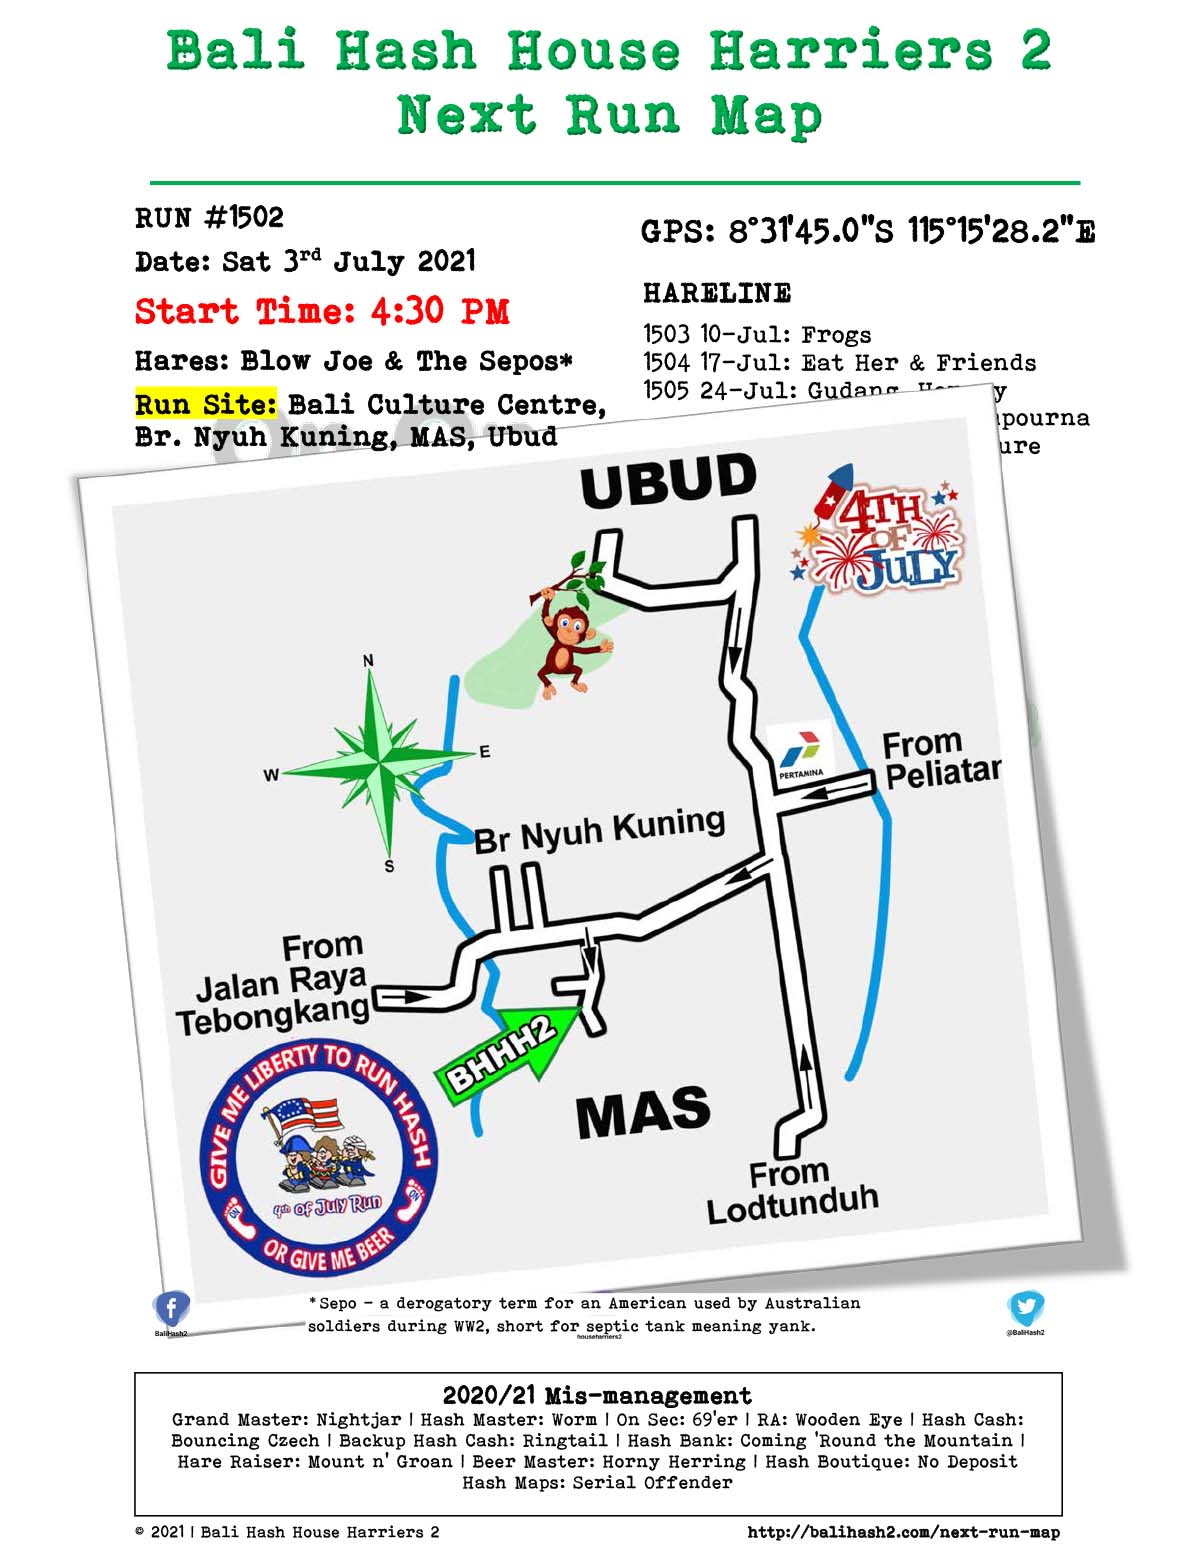 Bali Hash 2 Next Run Map #1502 Bali Culture Centre, Nyuh Kuning